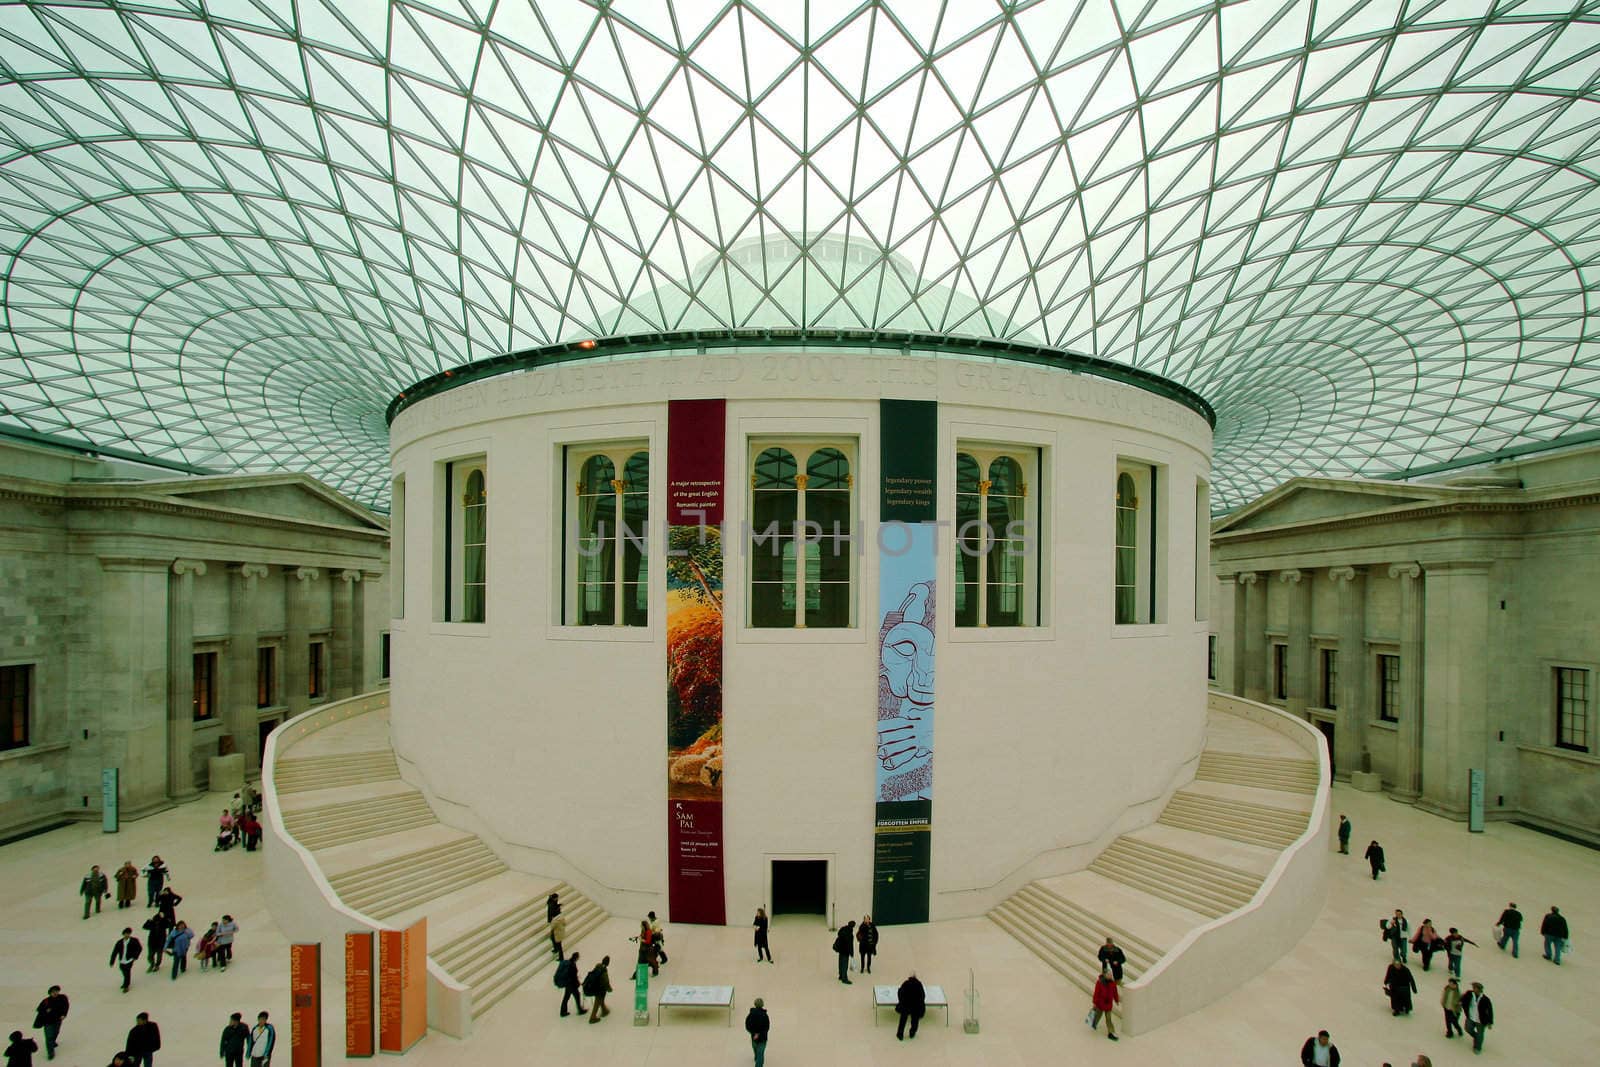 British museum by Imagecom